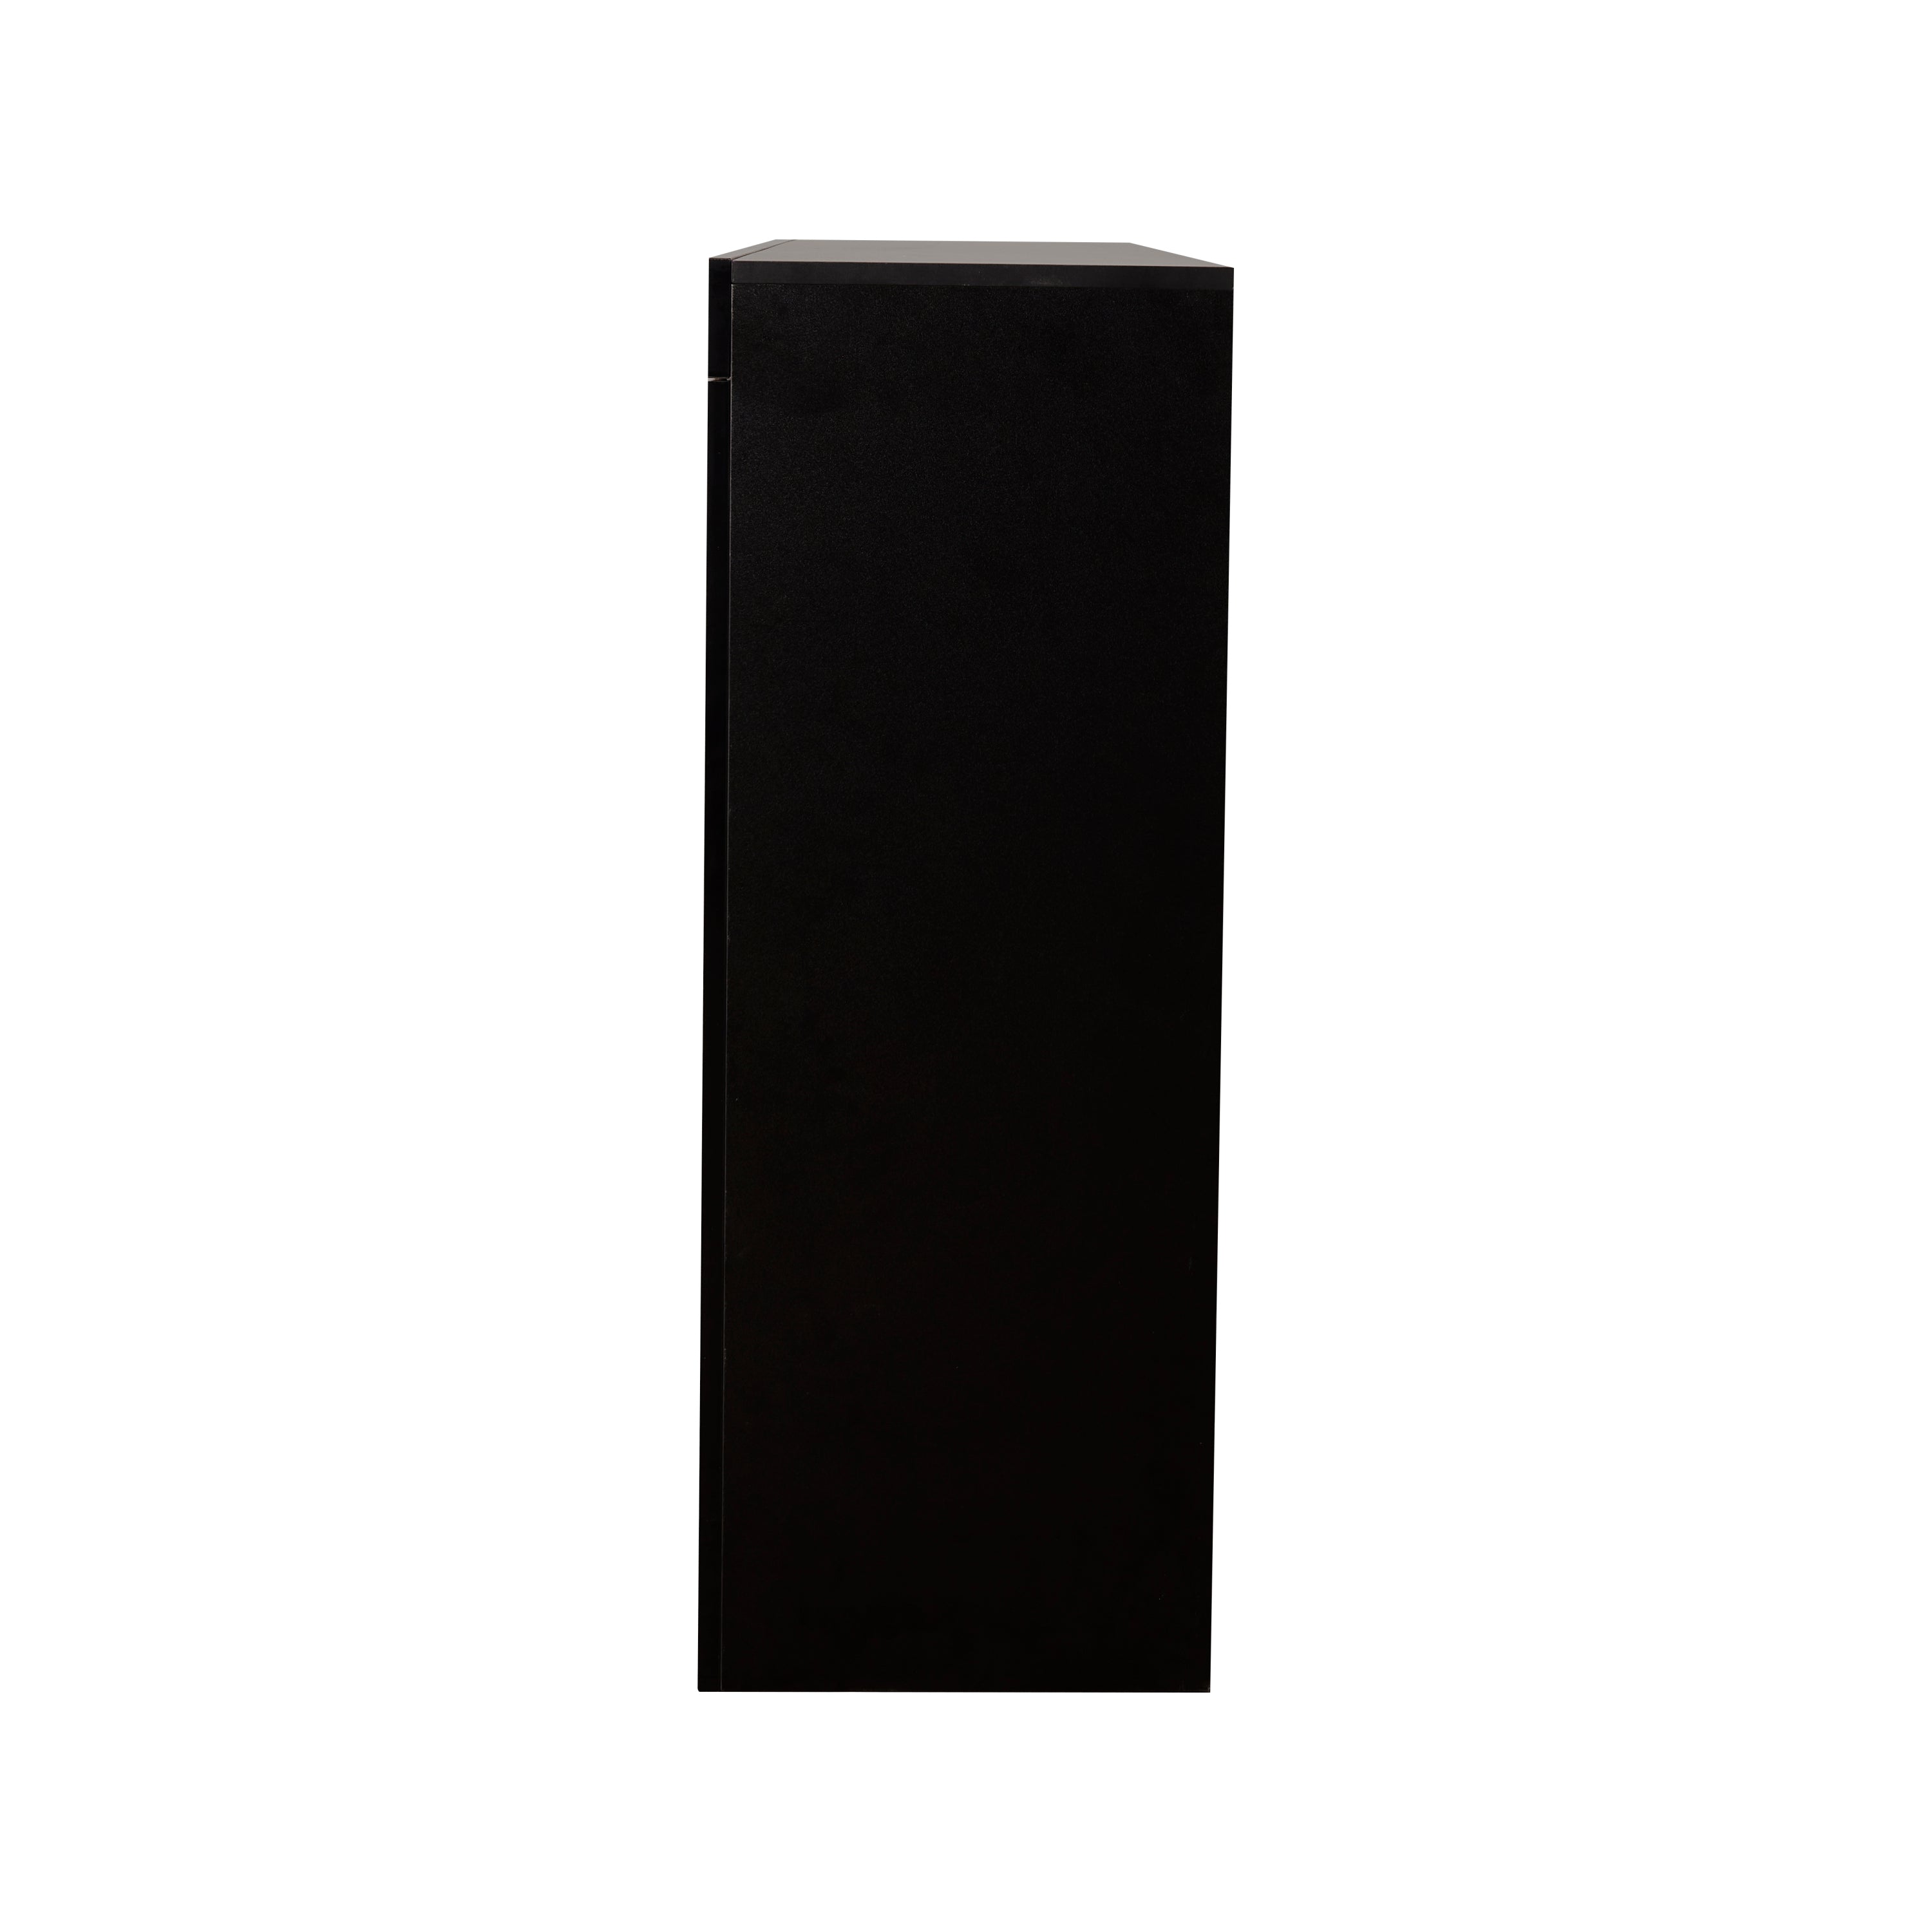 Locker High-gloss with LED Light (black)